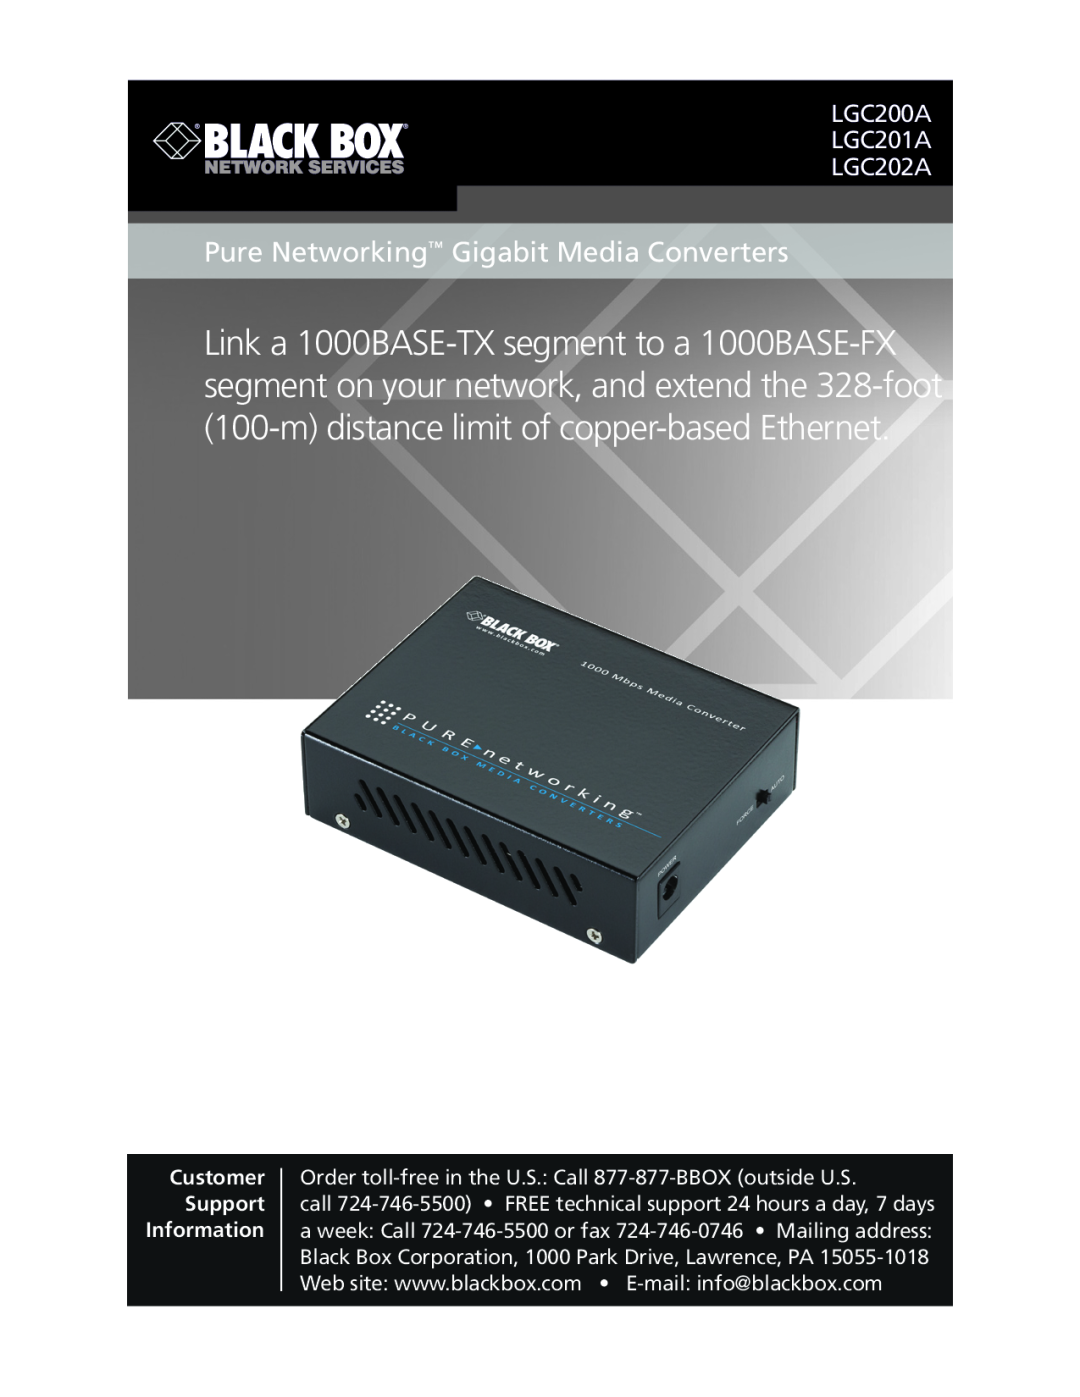 Black Box manual Pure Networking Gigabit Media Converters, LGC200A LGC201A LGC202A, Customer Support Information 